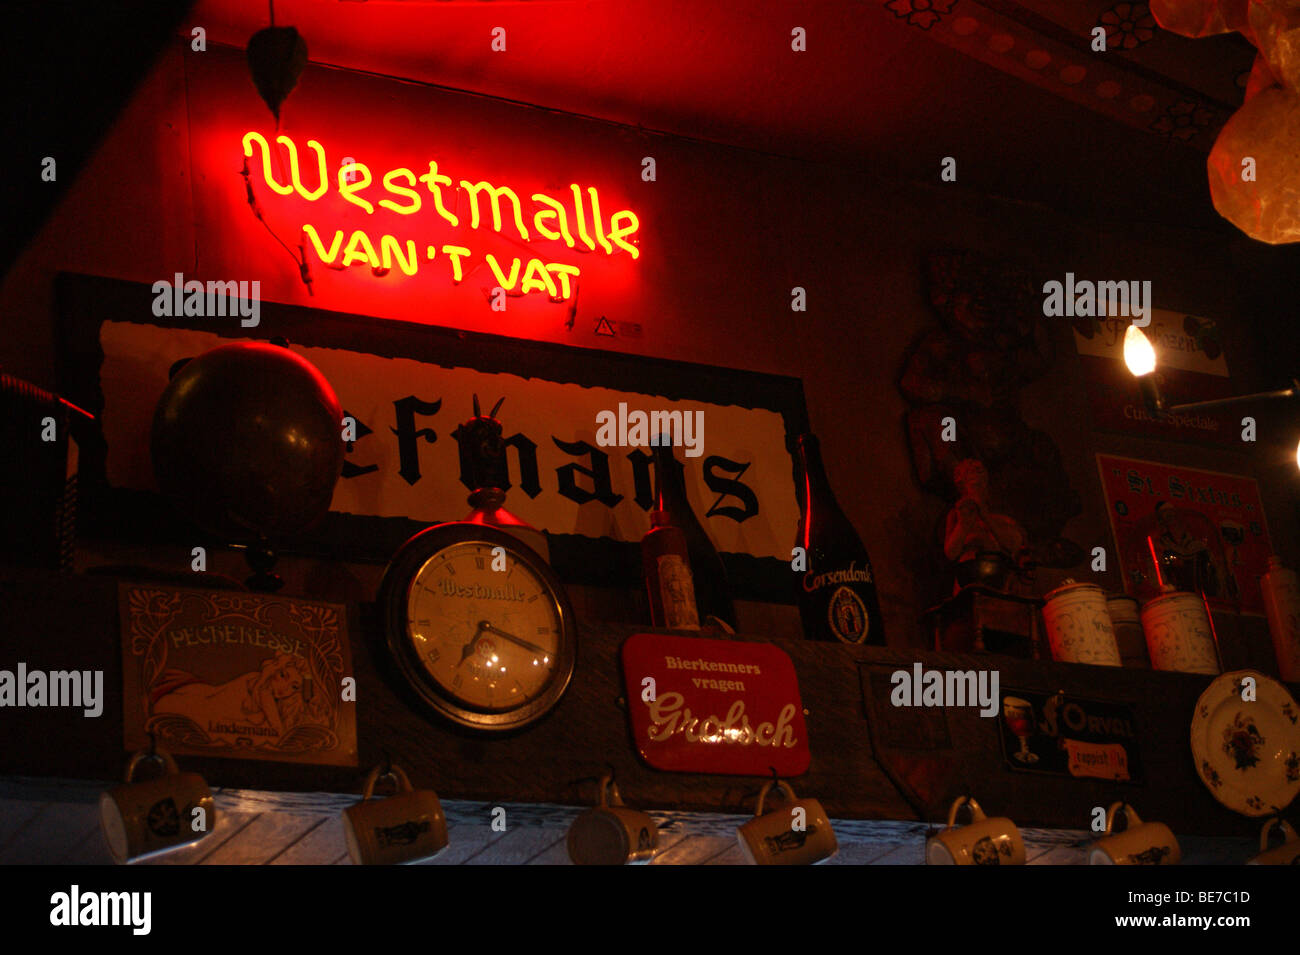 Westmalle beer sign, Dulle Griet bar, cafe, Gent, Belgium Stock Photo